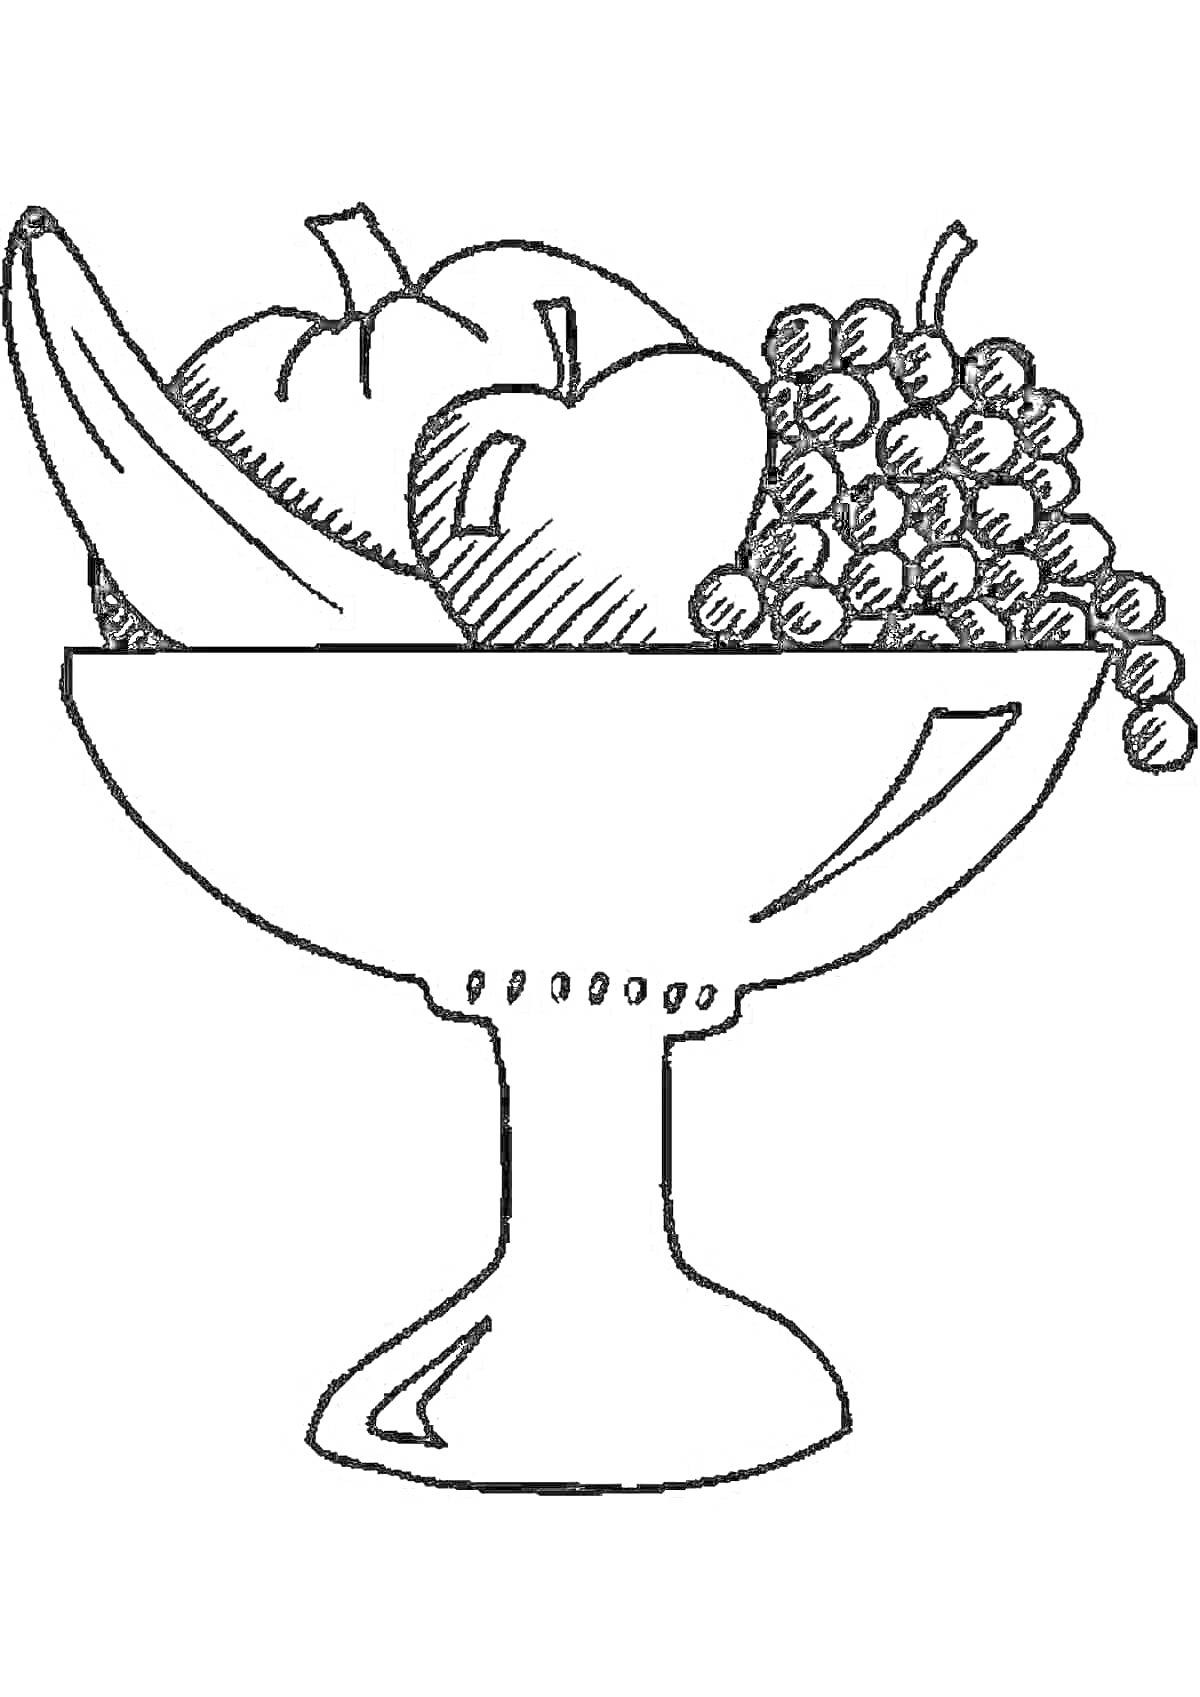 Раскраска Ваза с фруктами (банан, яблоко, виноград)